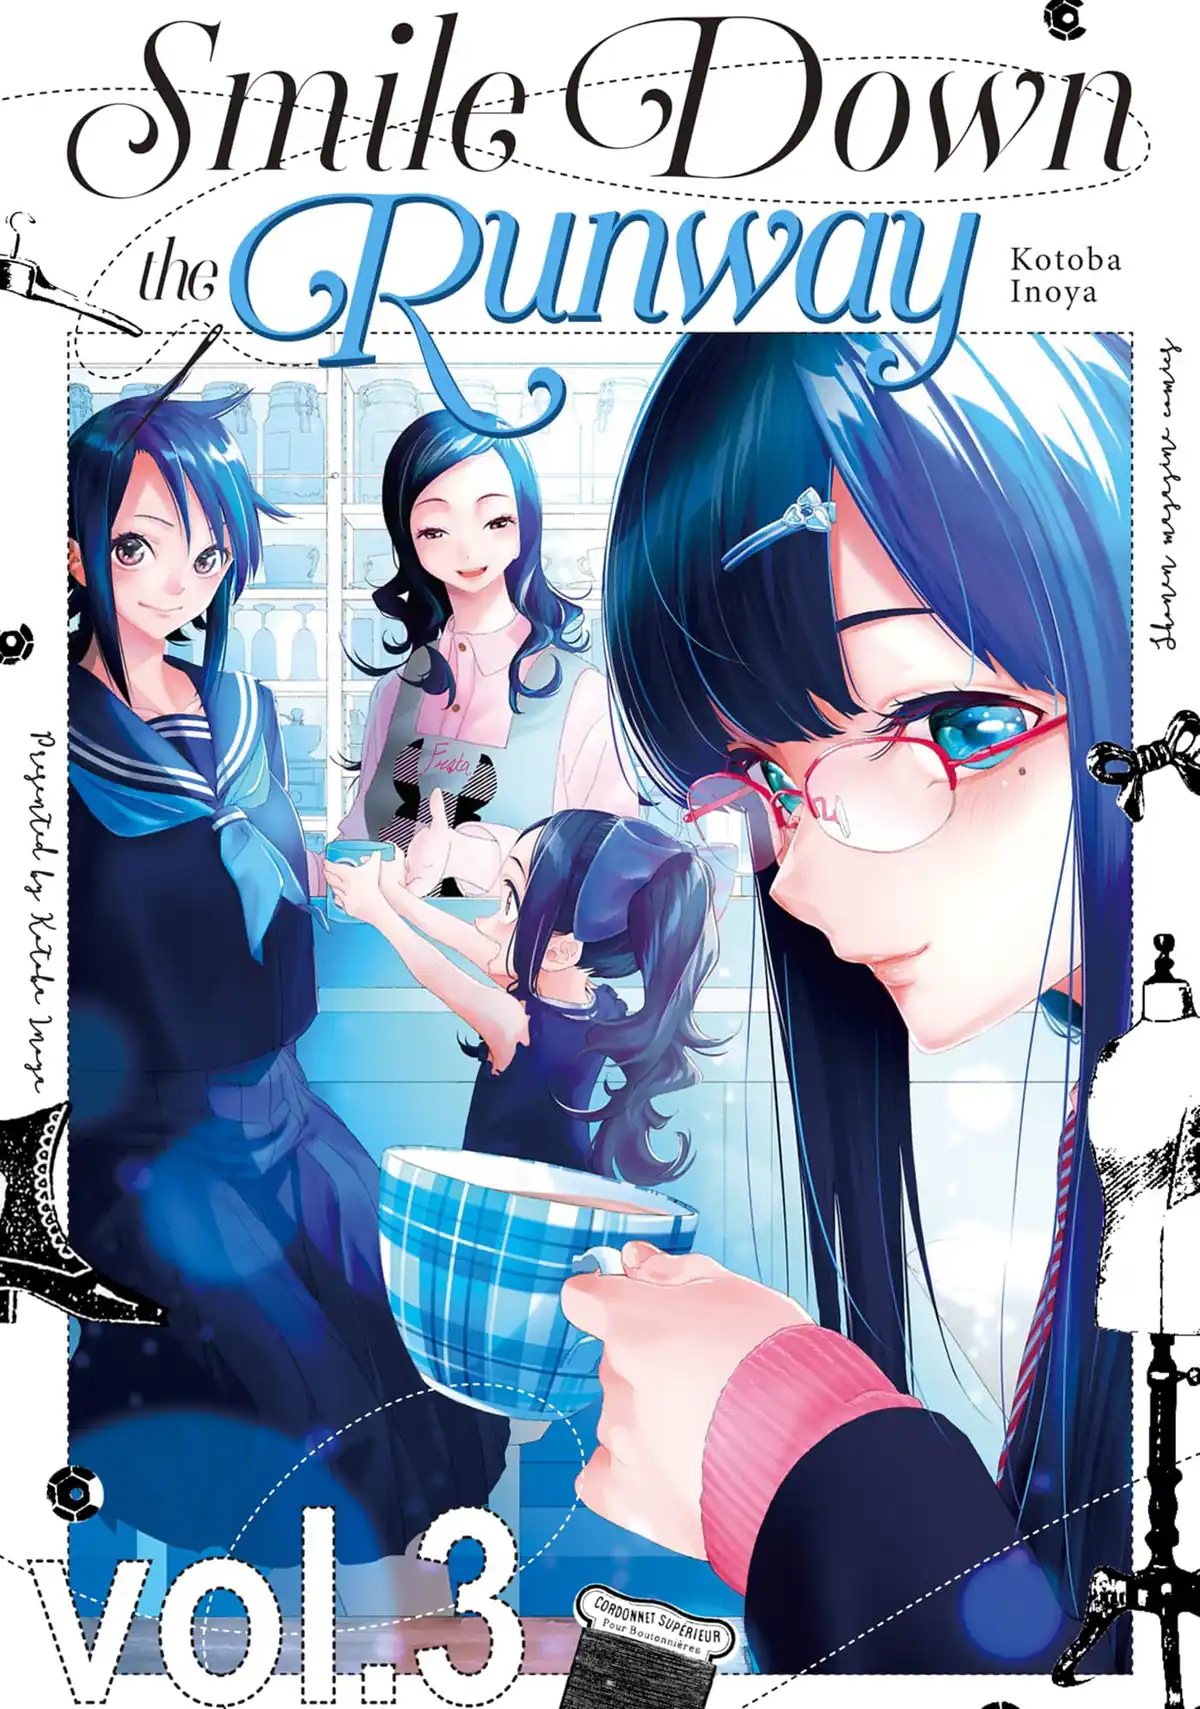 Runway de Waratte Manga - Chapter 102 - Manga Rock Team - Read